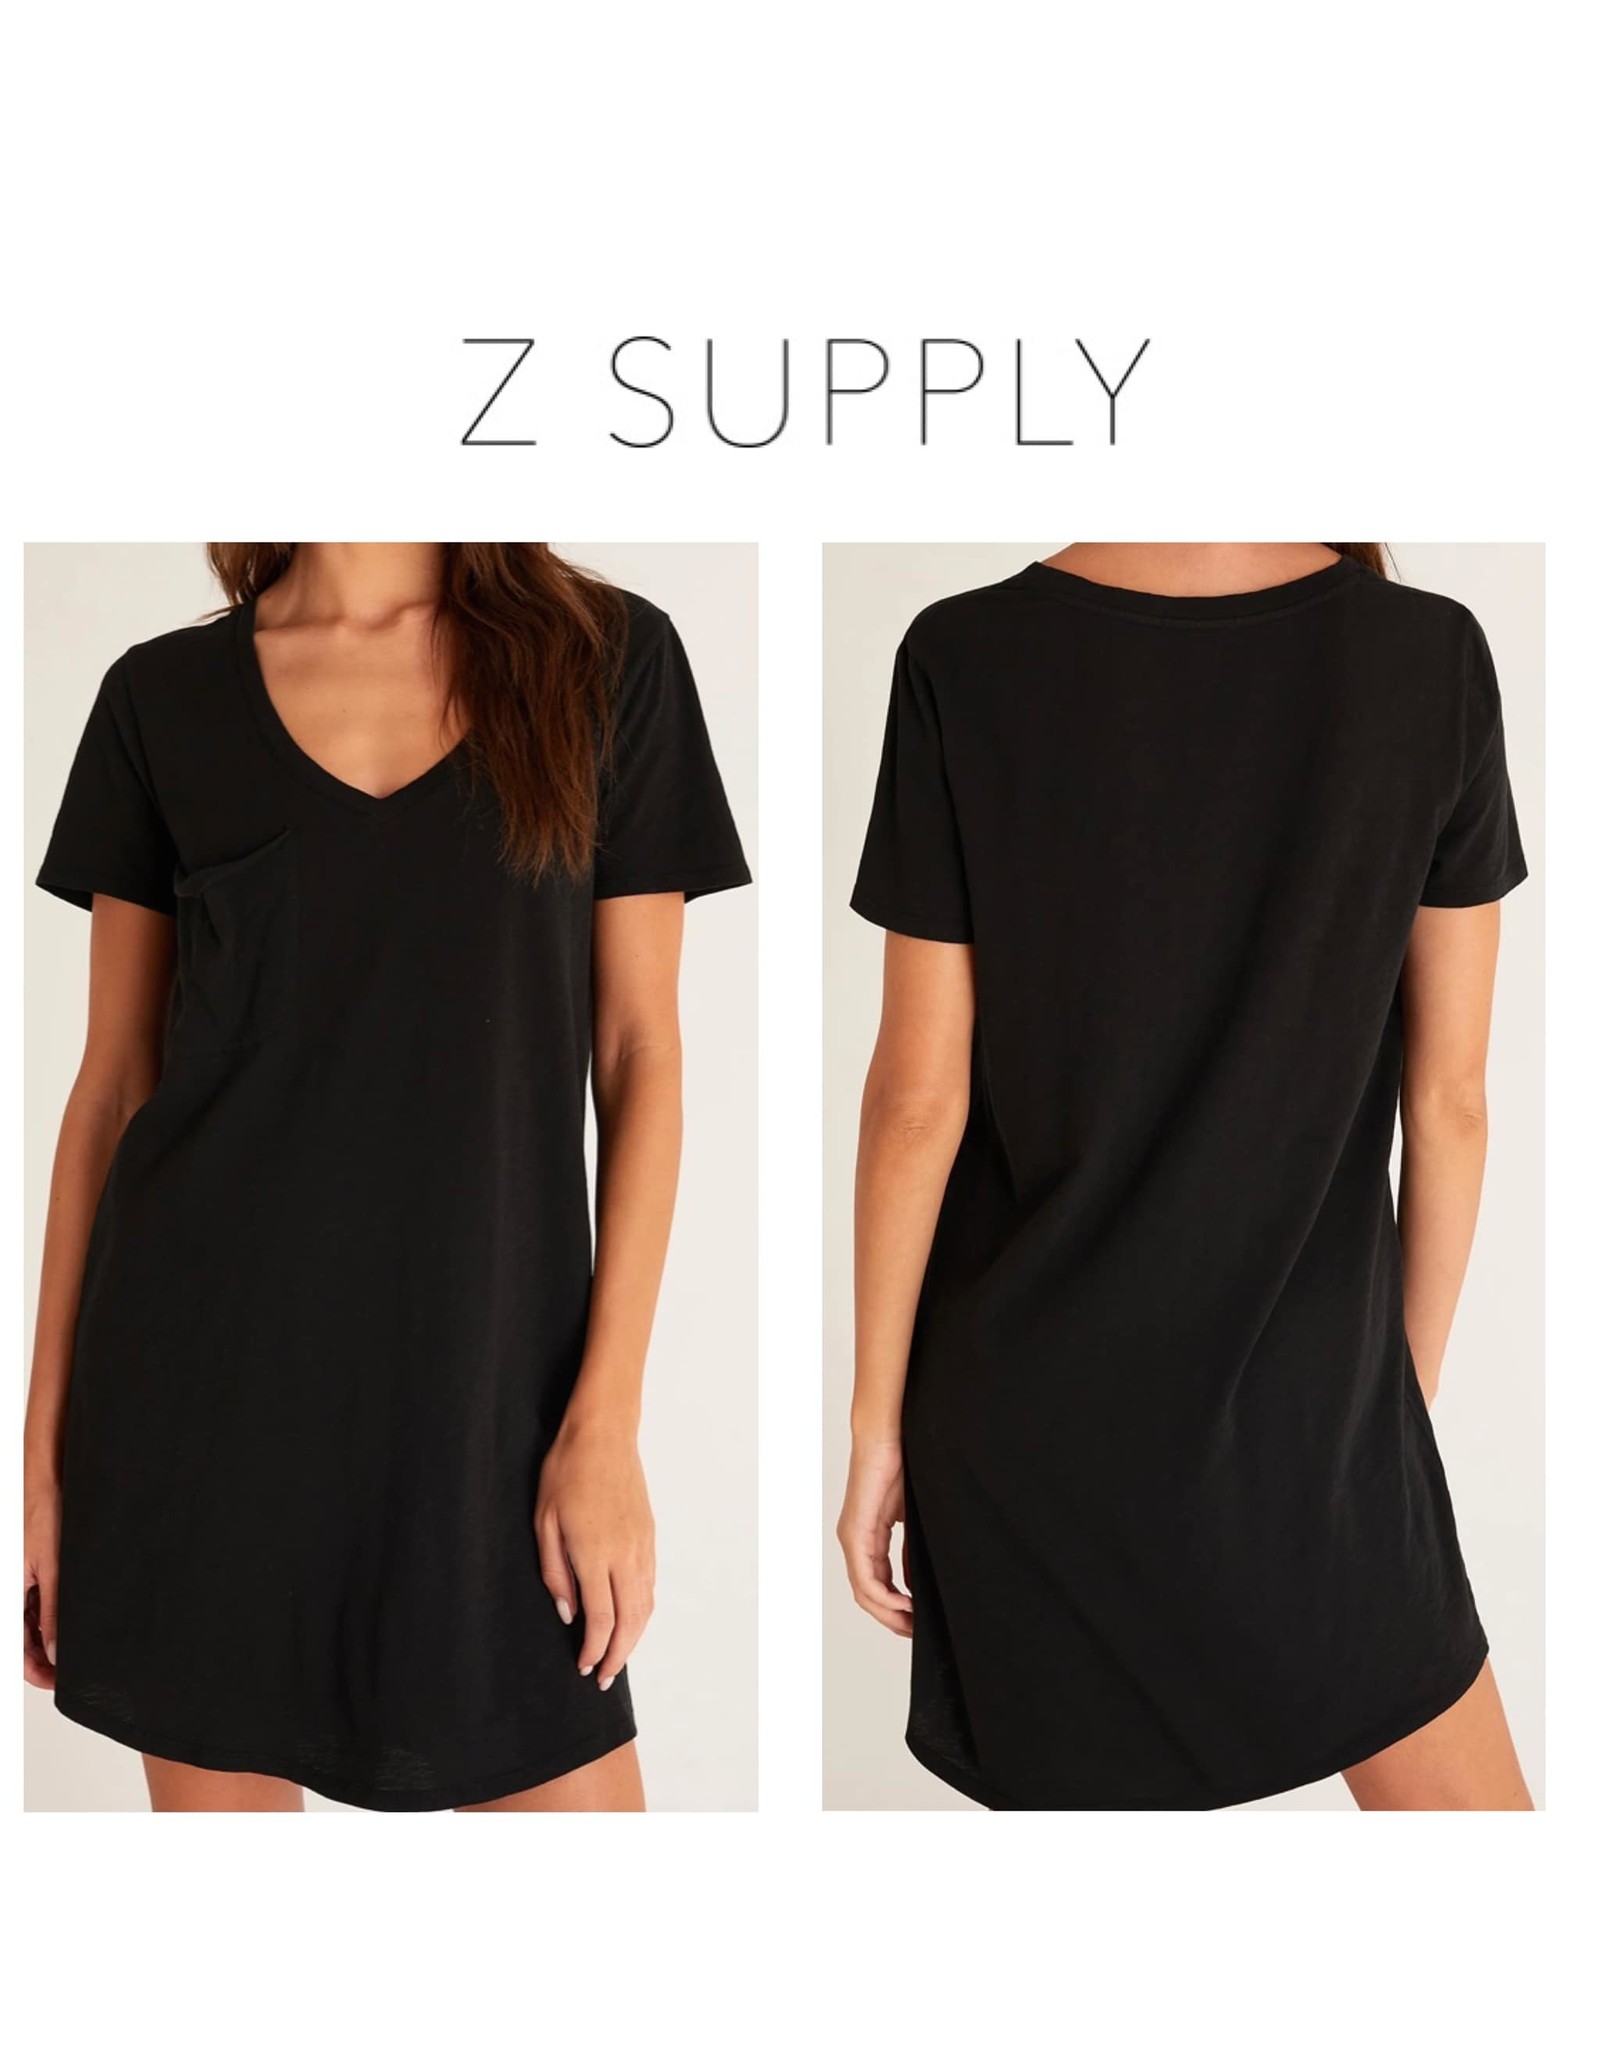 Z Supply Z Supply Pocket Tee Dress